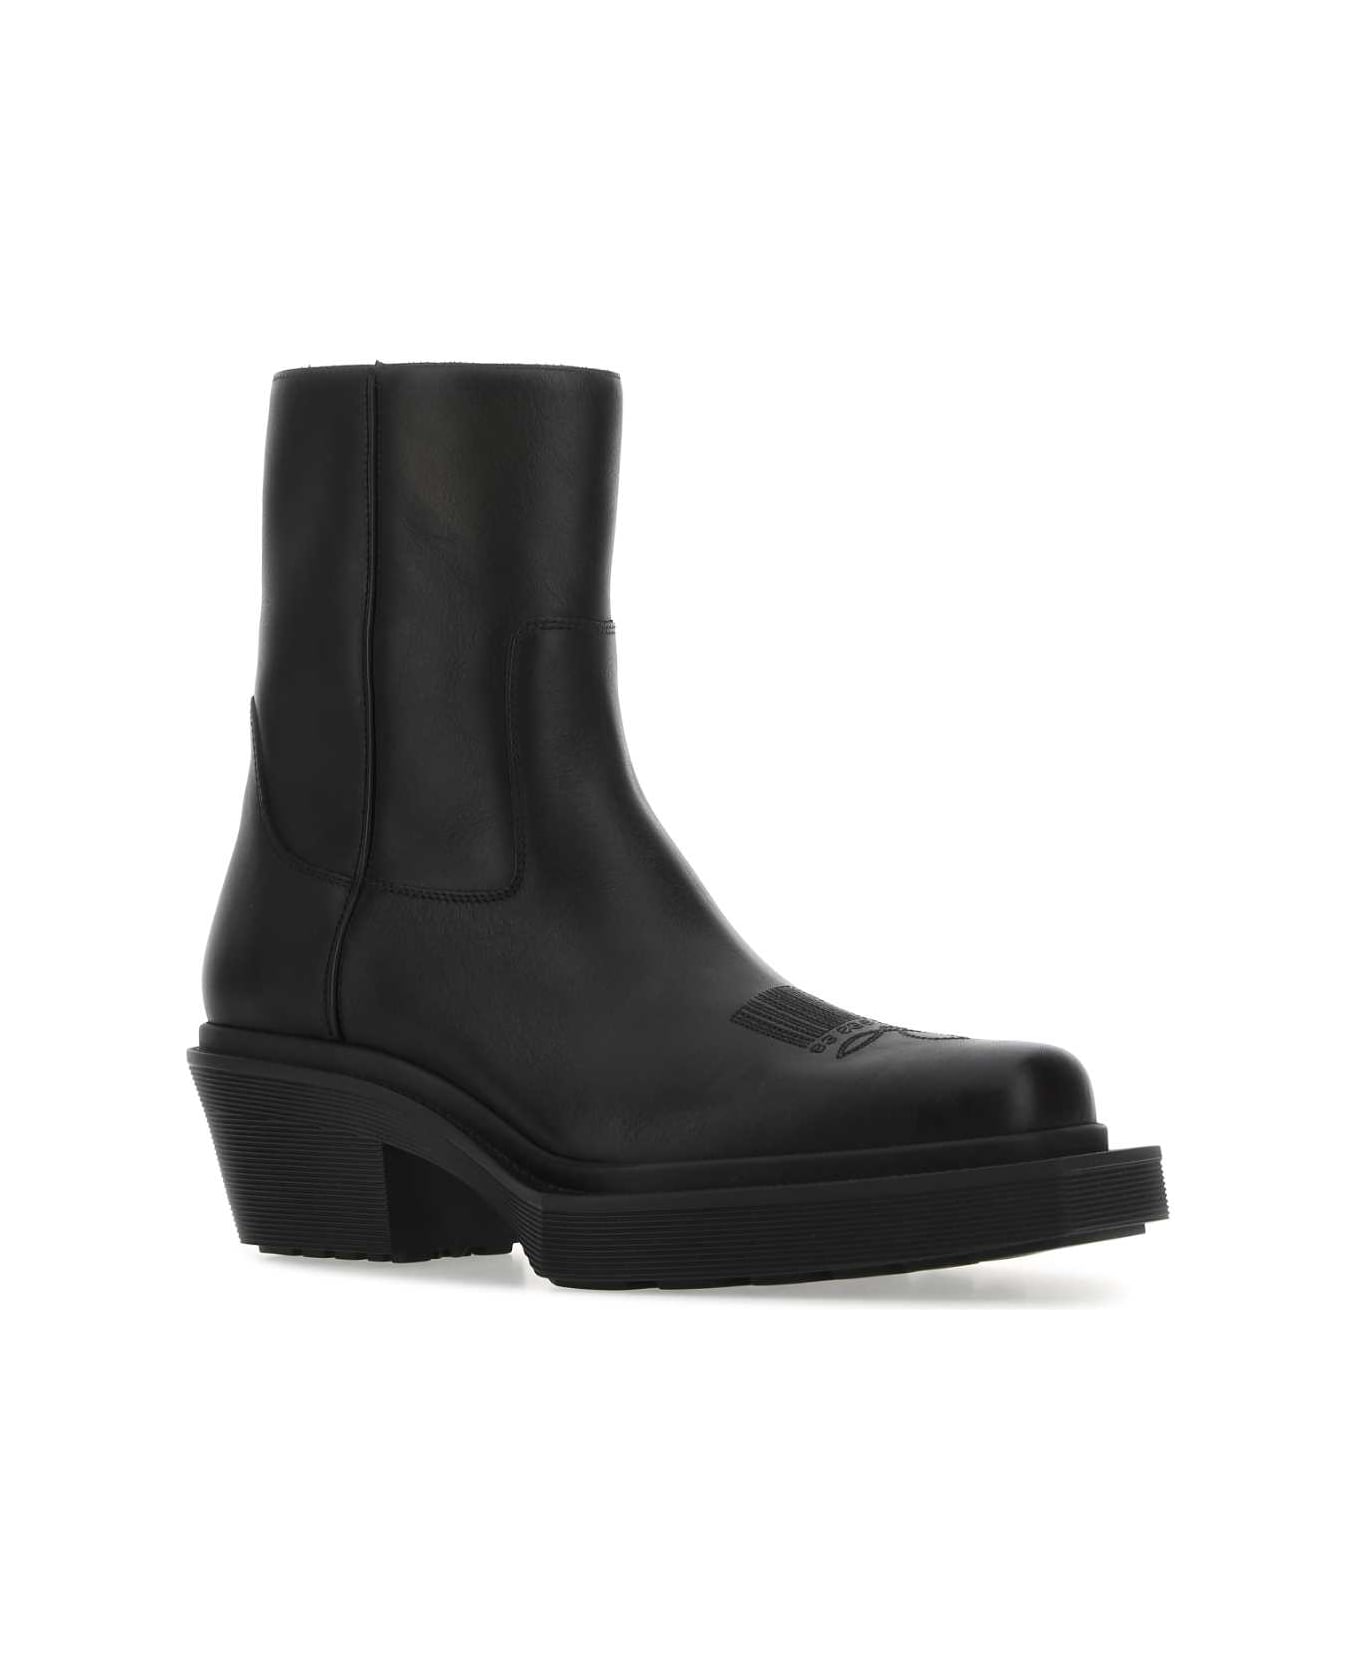 VTMNTS Black Leather Ankle Boots - MATTEBLACK ブーツ